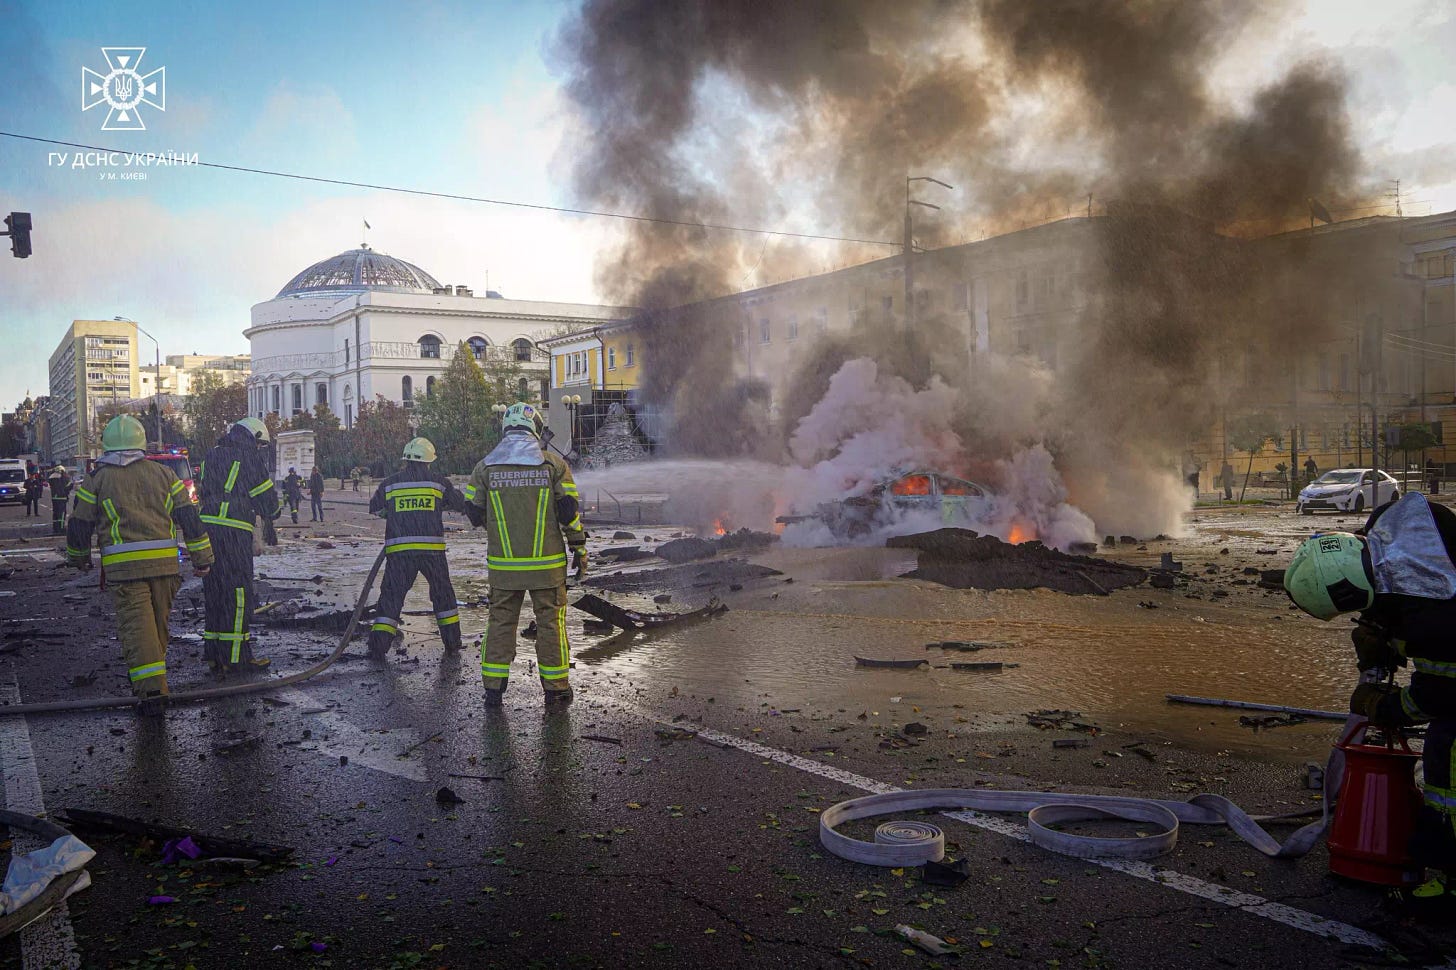 File:Kyiv after Russian shelling, 2022-10-10 (080).webp - Wikimedia Commons